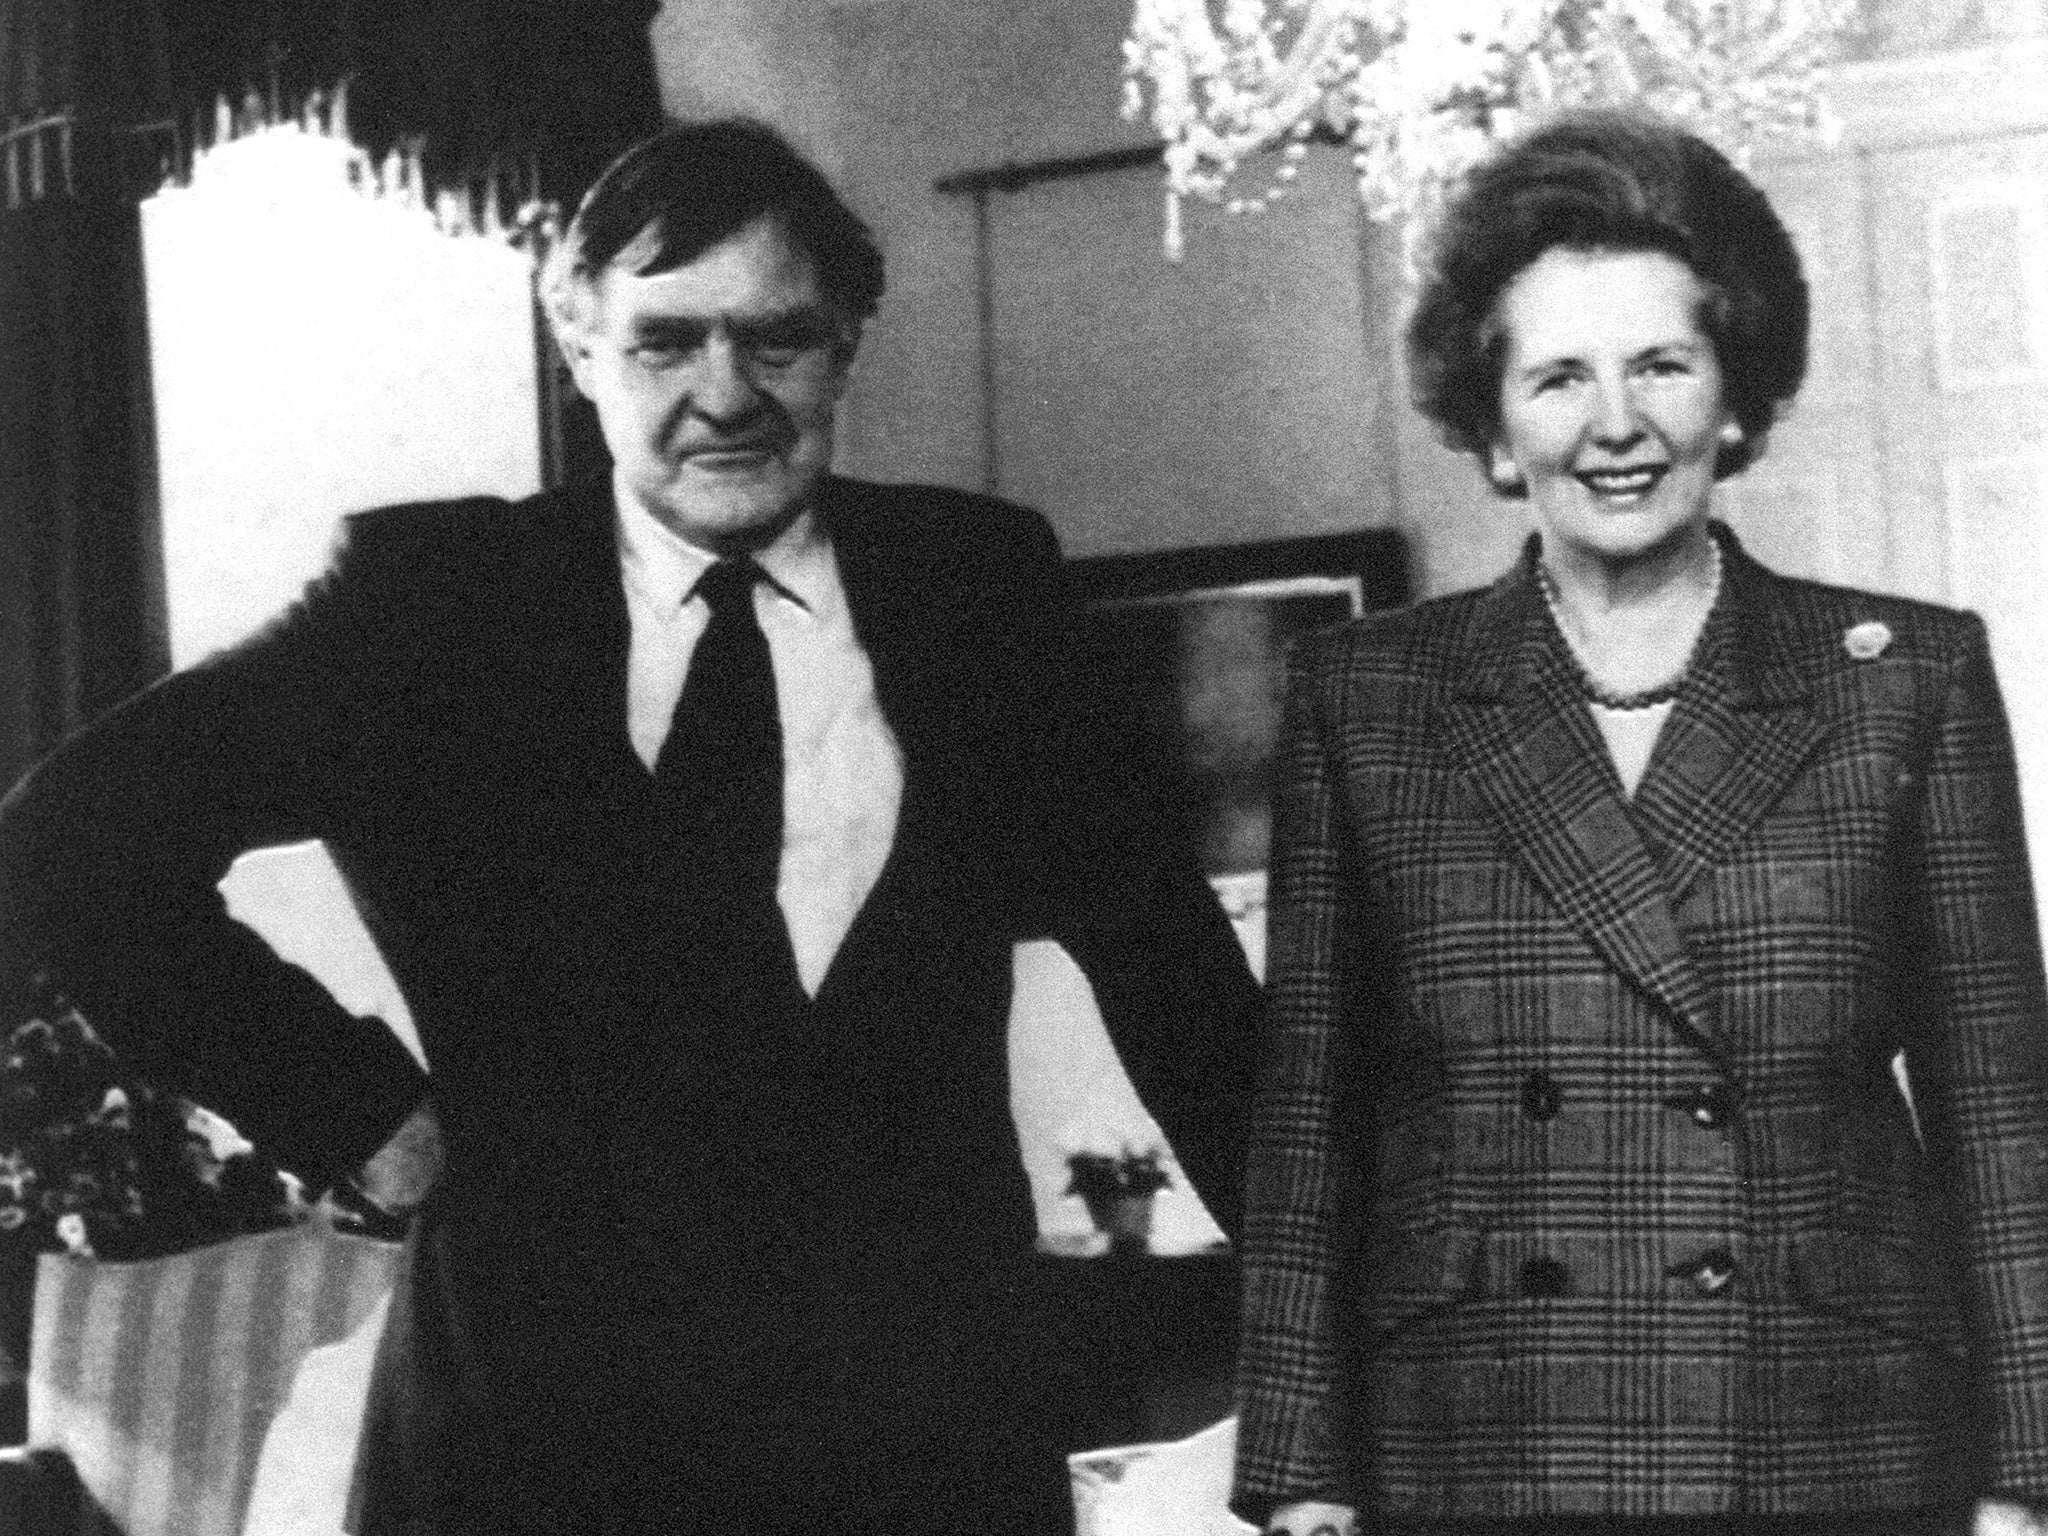 Undated file photo of Prime Minister Margaret Thatcher with her press secretary Bernard Ingham